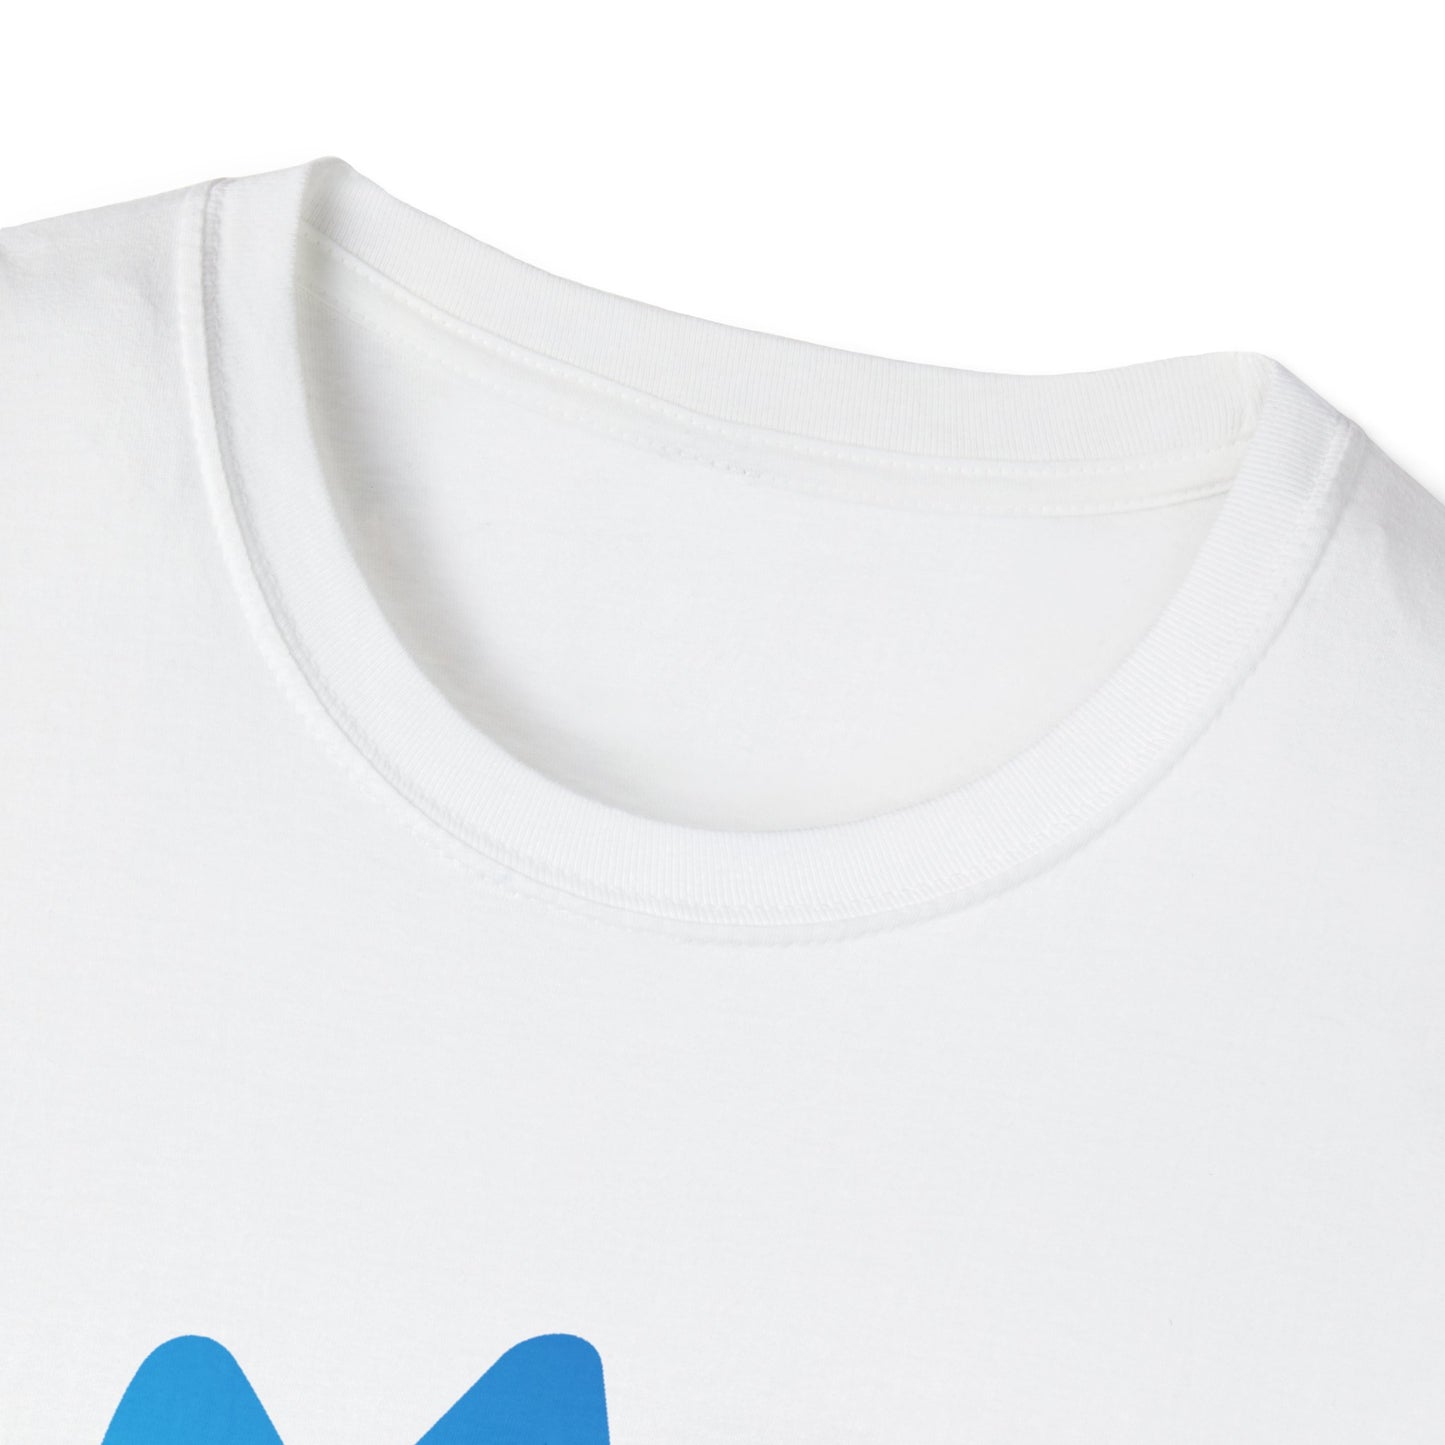 T-Shirt Valshan Bleu - Unisex Softstyle T-Shirt